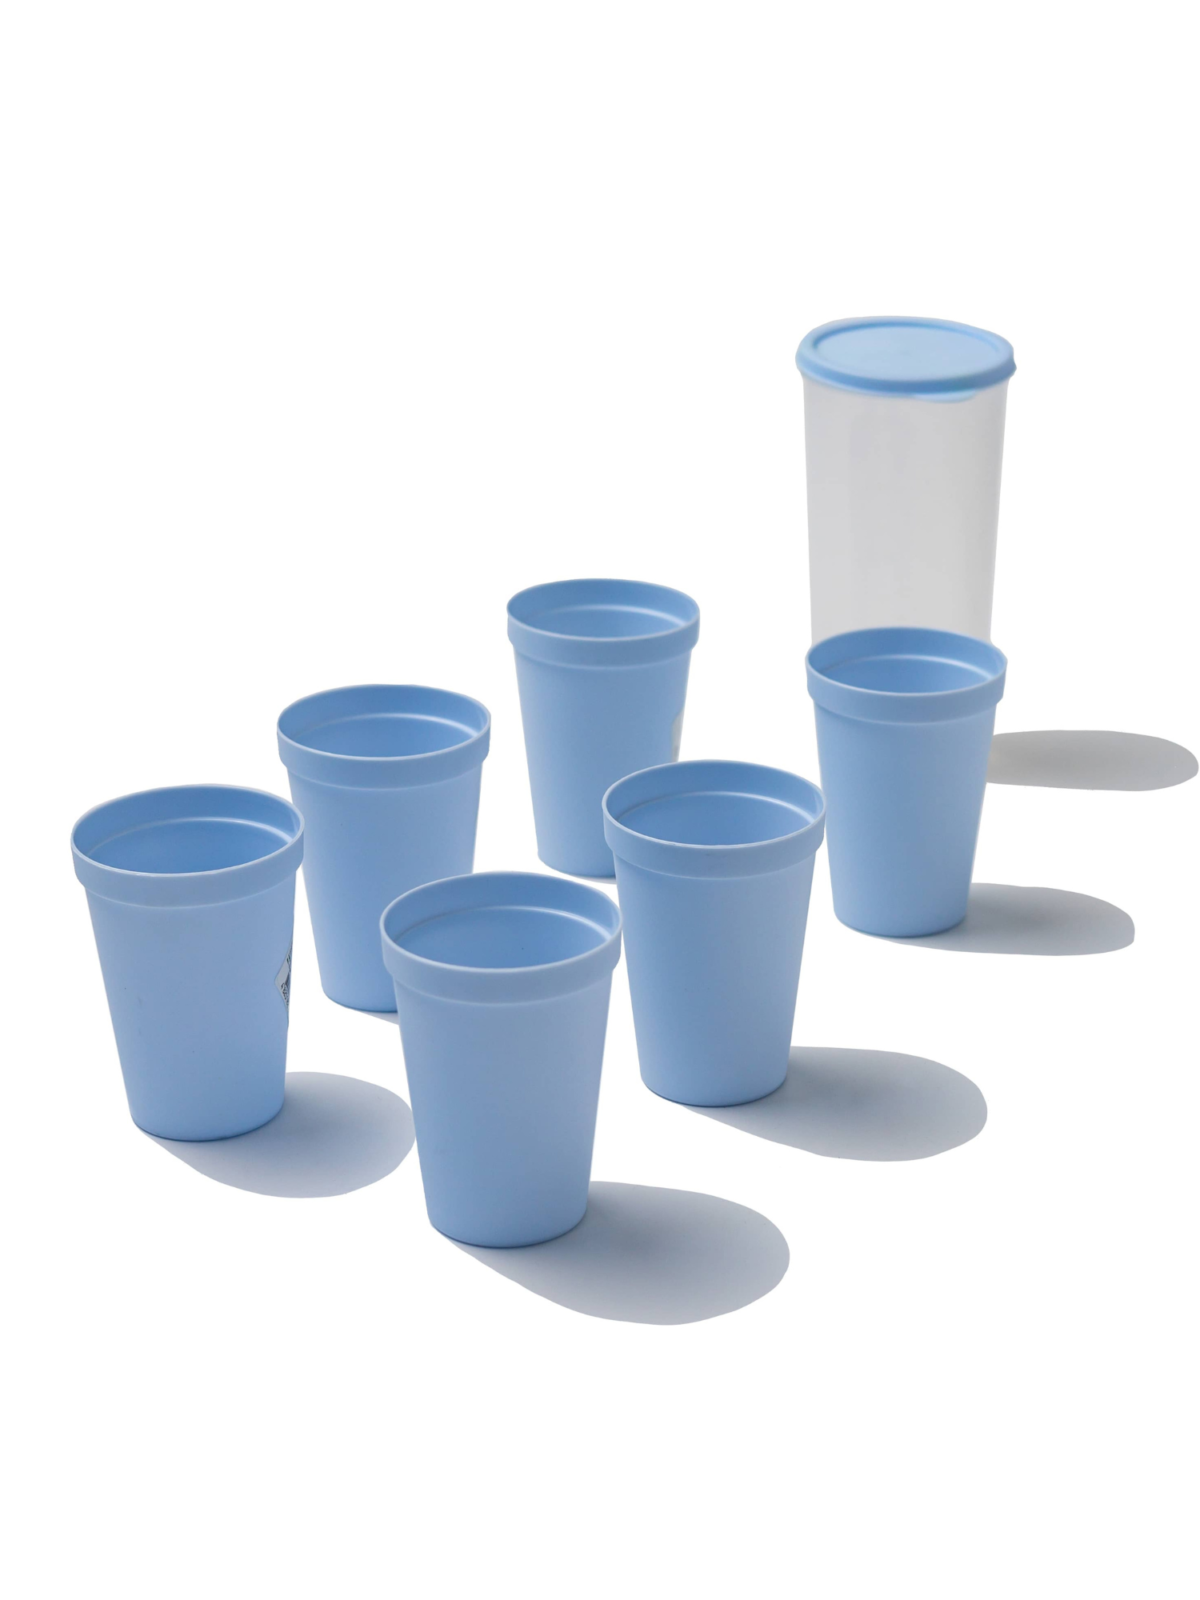 6 Pack Plastic Kids Cups Reusable, light blue cups